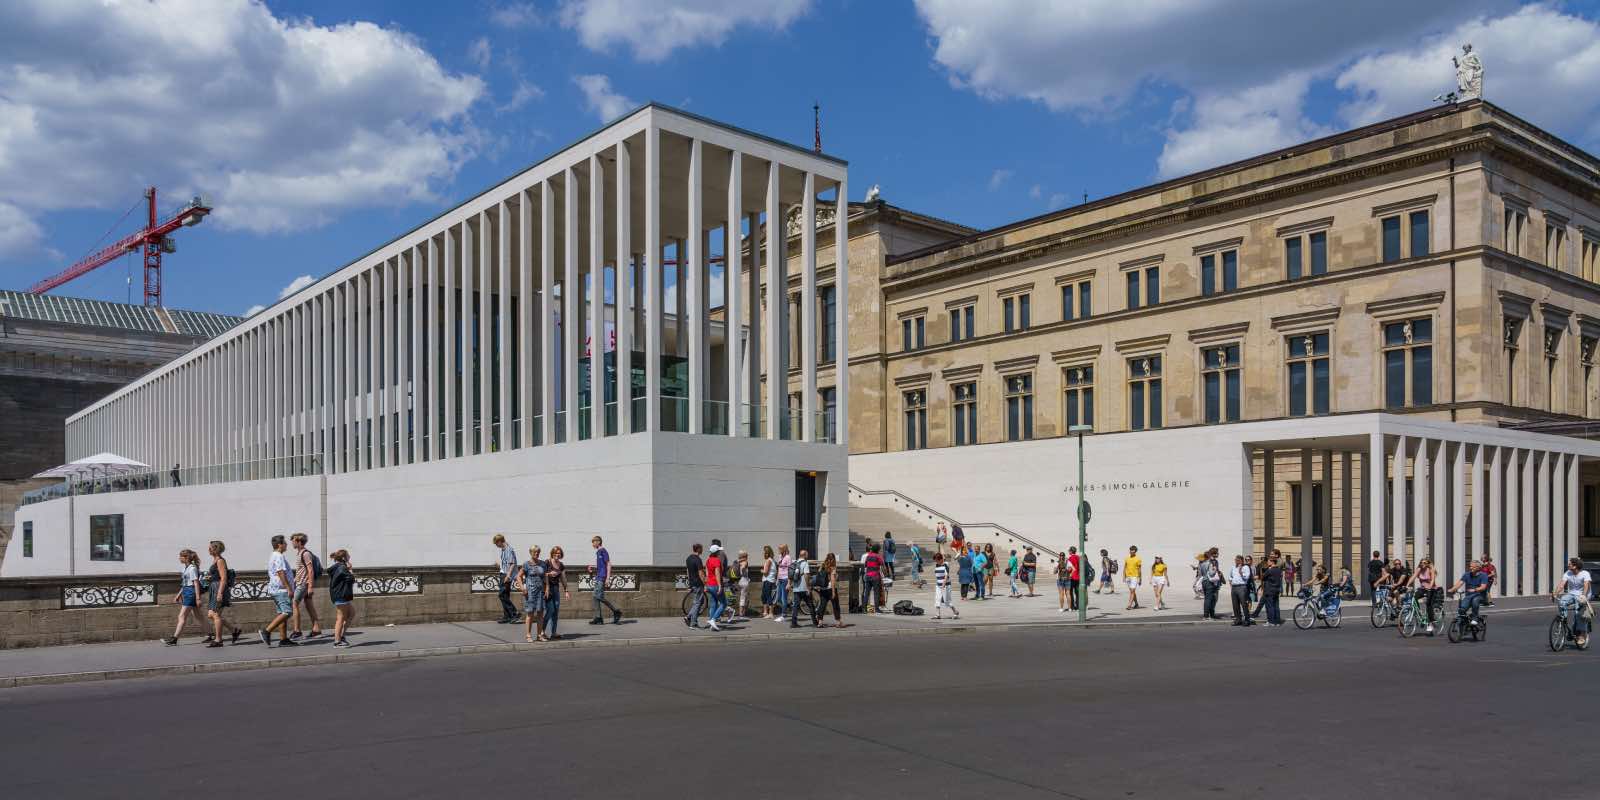 Neues Museum en Berlín, reforma de david chipperfield, arquitectos famosos